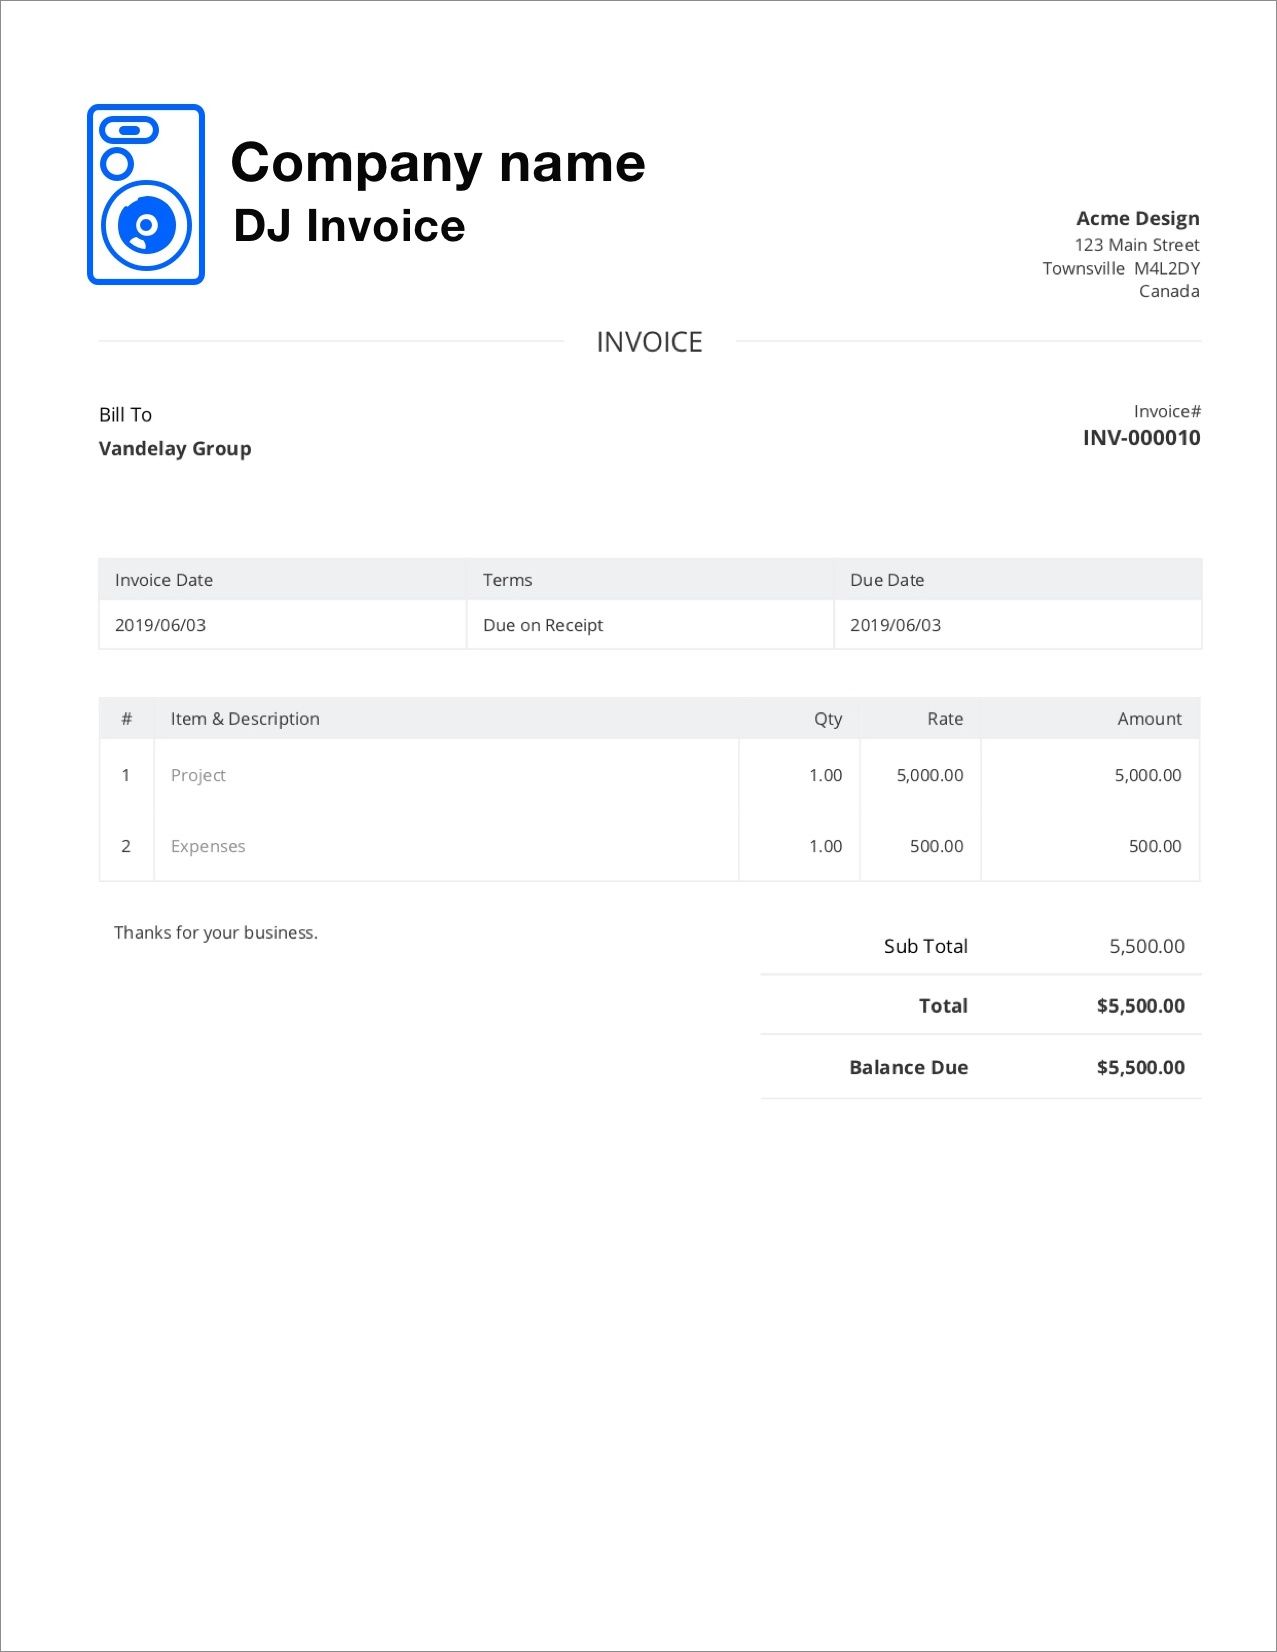 sample of DJ invoice template